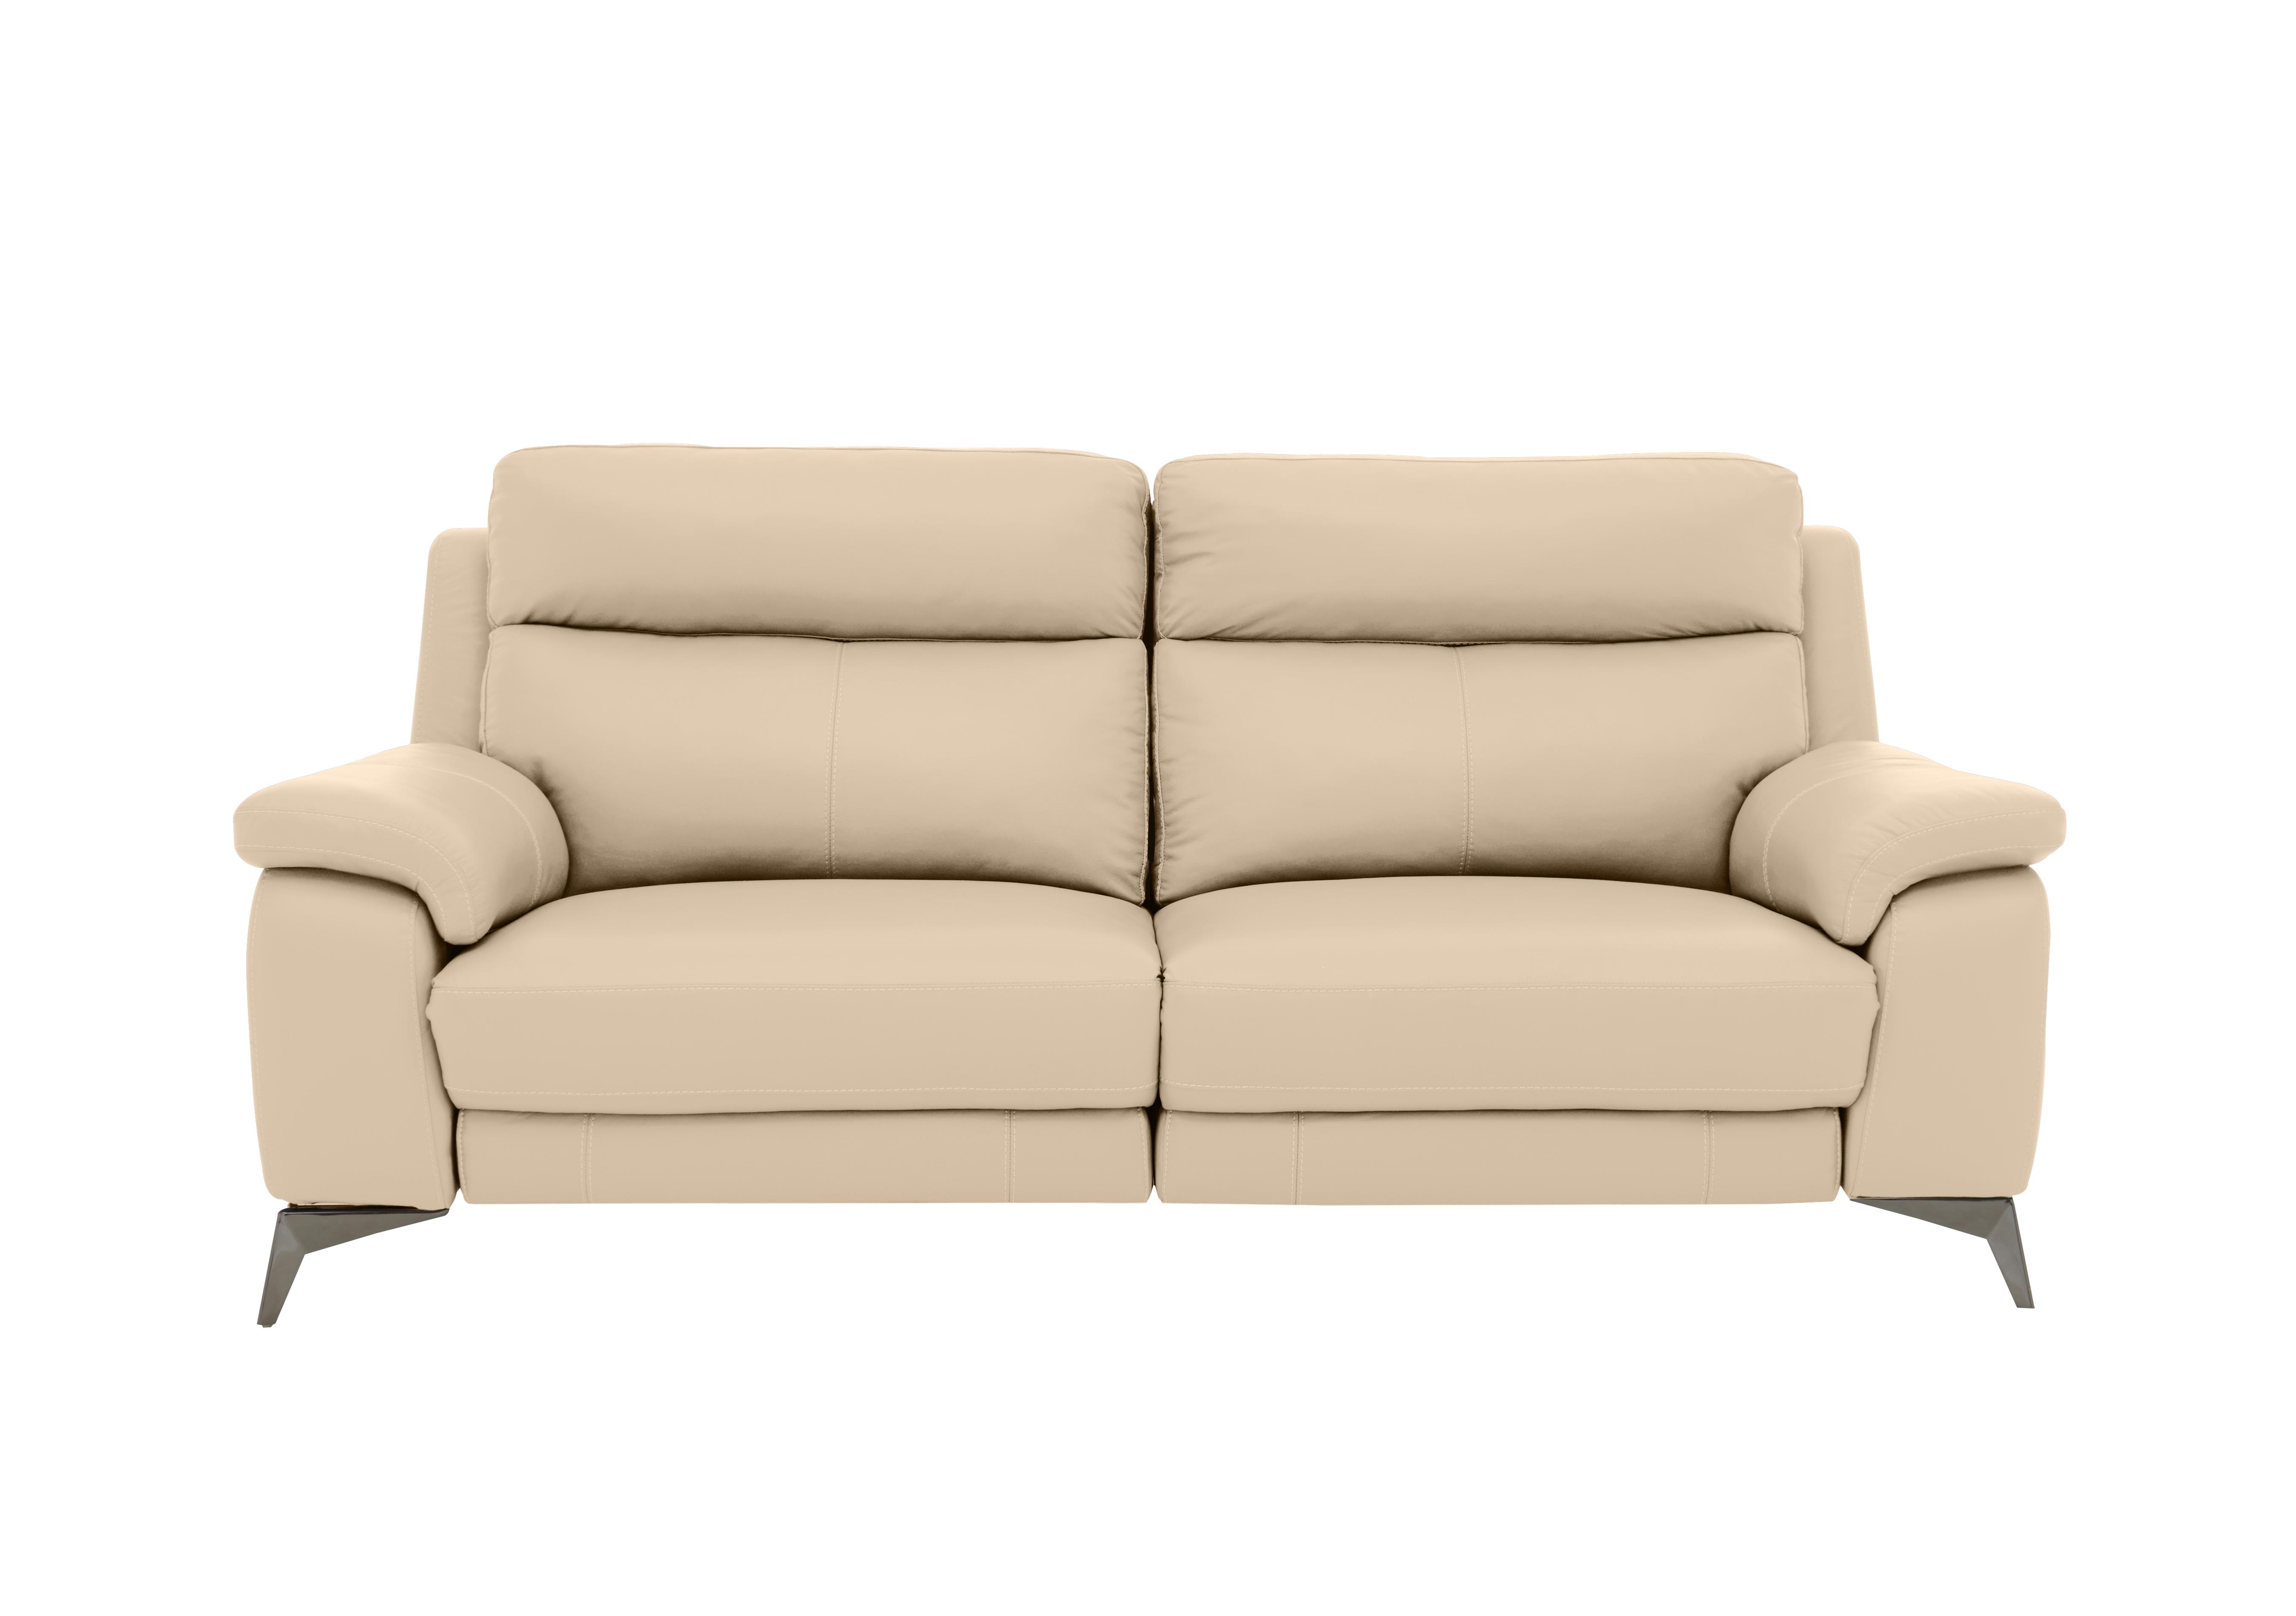 Missouri 3 Seater Leather Recliner Sofa with Power Headrest in Bv-862c Bisque on Furniture Village